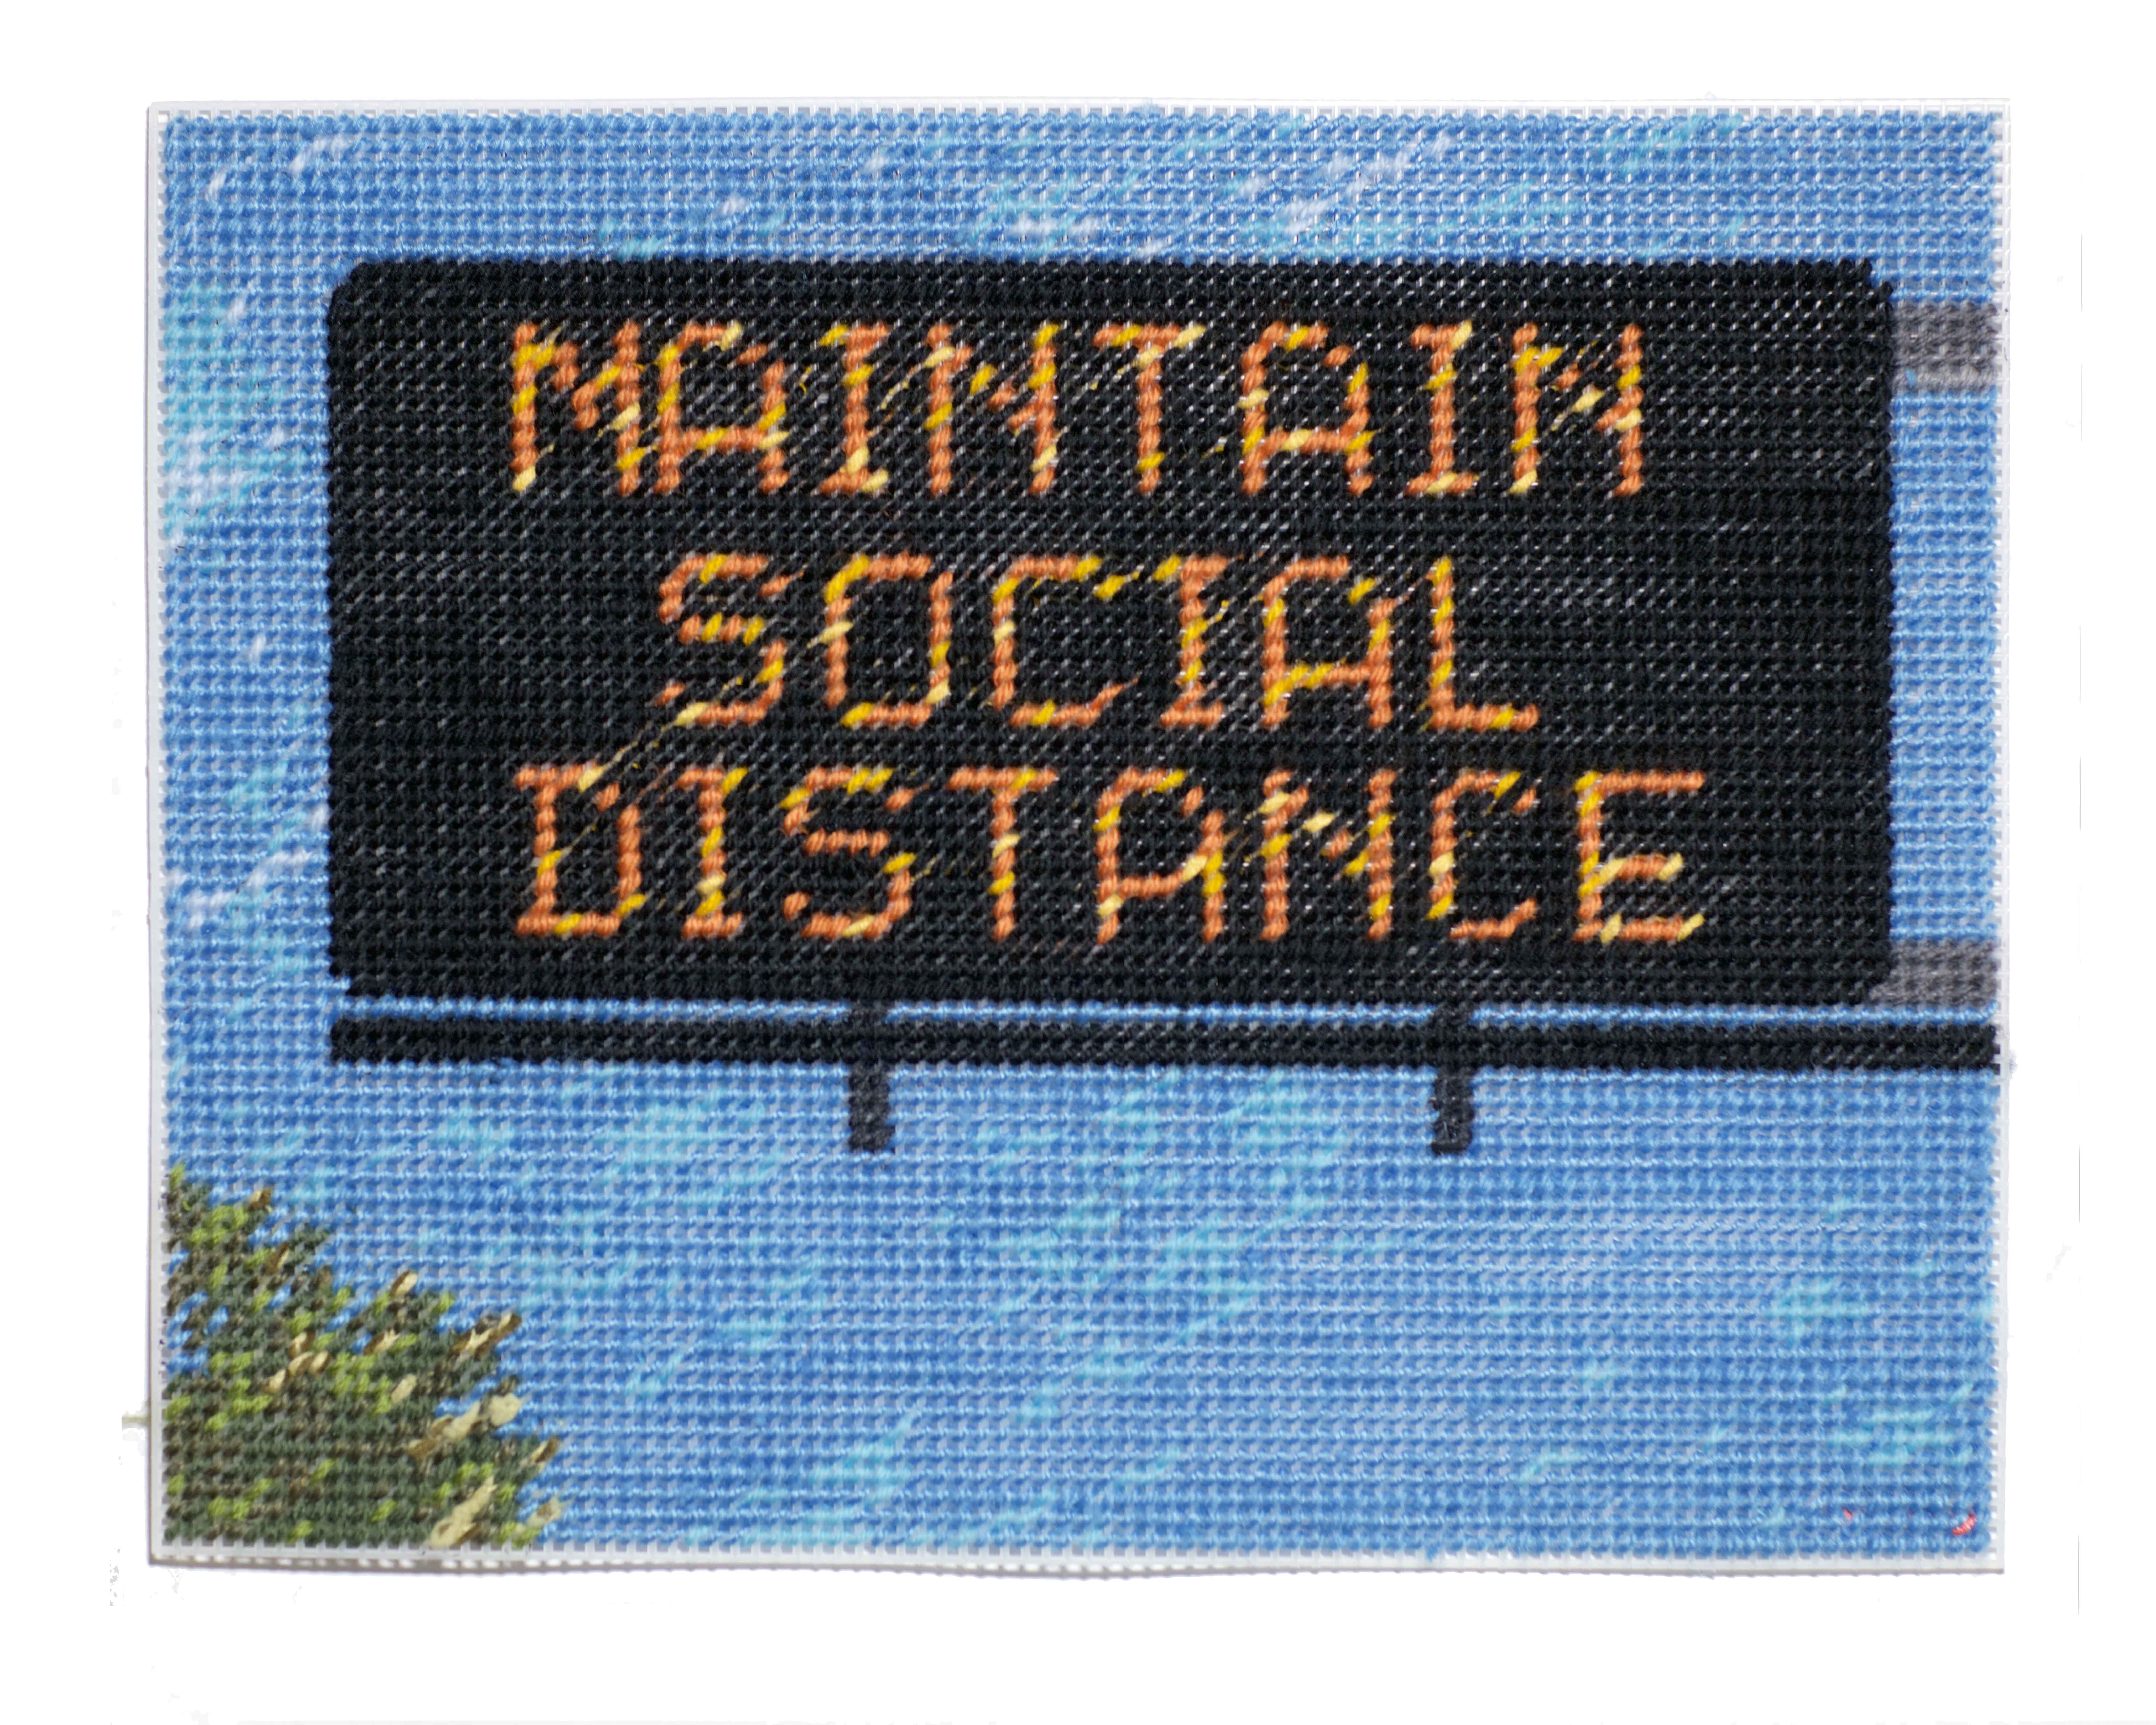 Michelle Hamer, Maintain Social Distance, 2021